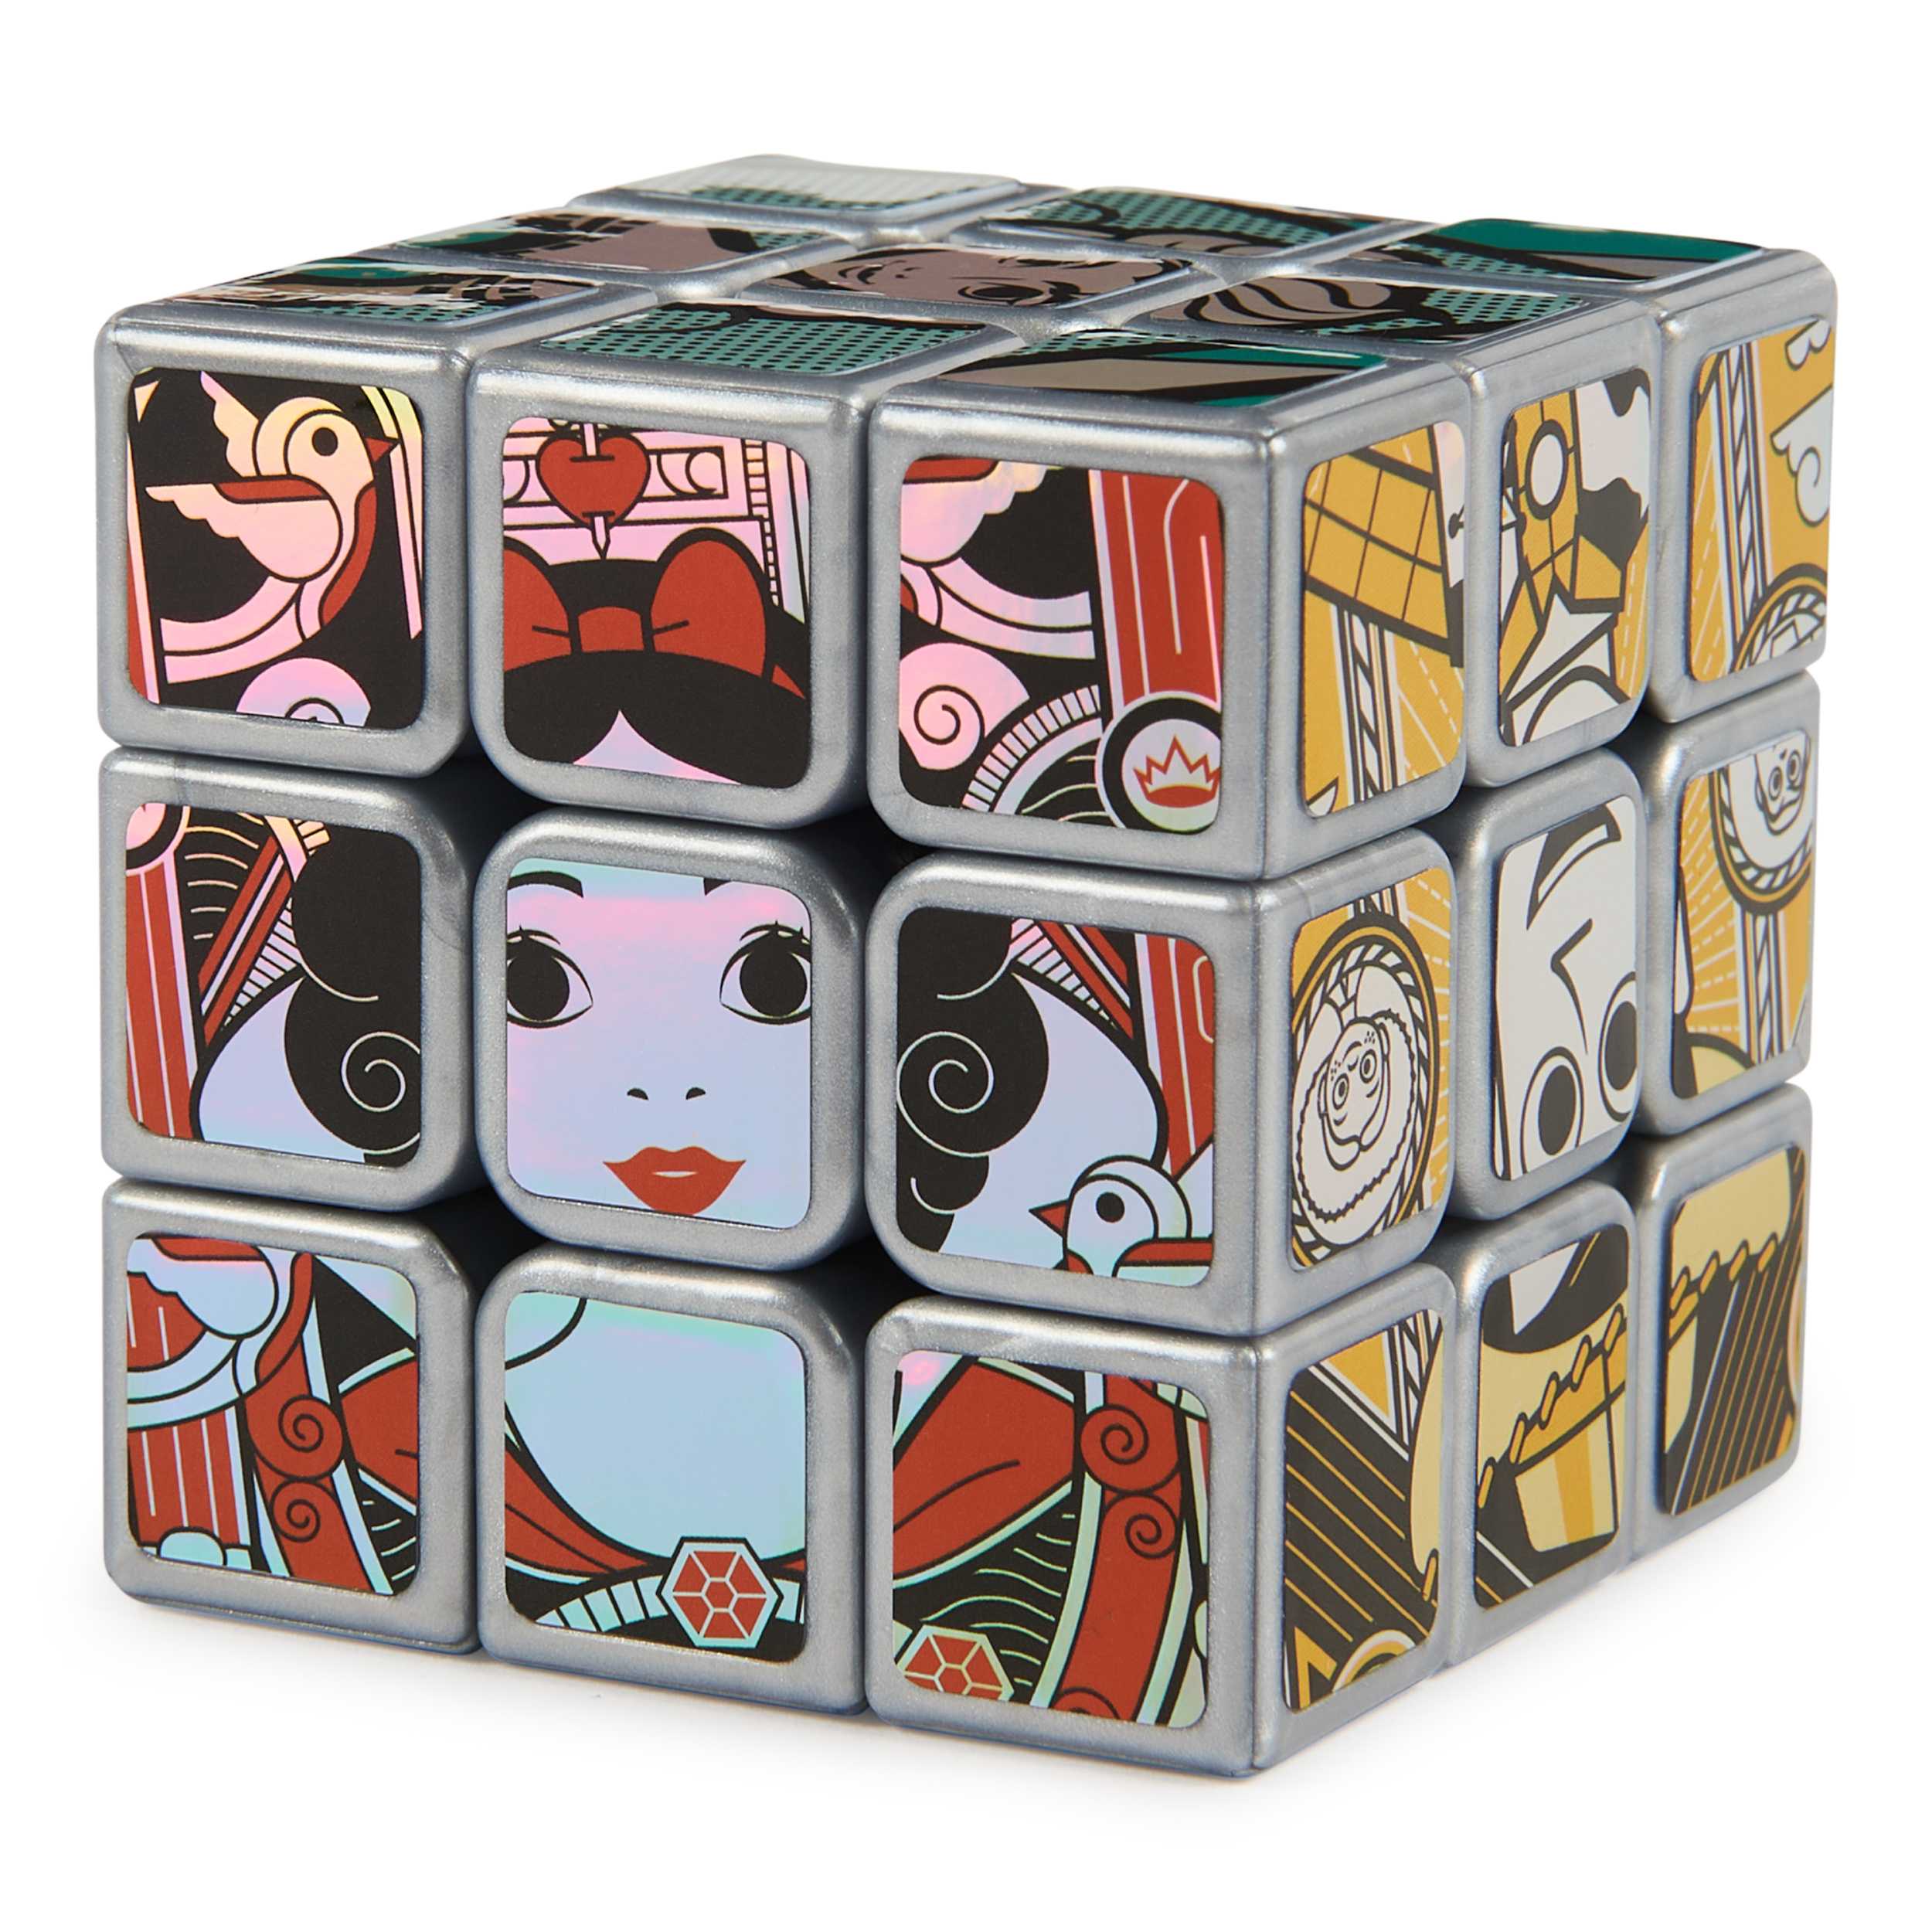 Spin Master-Rubik's 3 x 3 Disney 100th Anniversary Metallic Platinum Cube-6068390-Legacy Toys